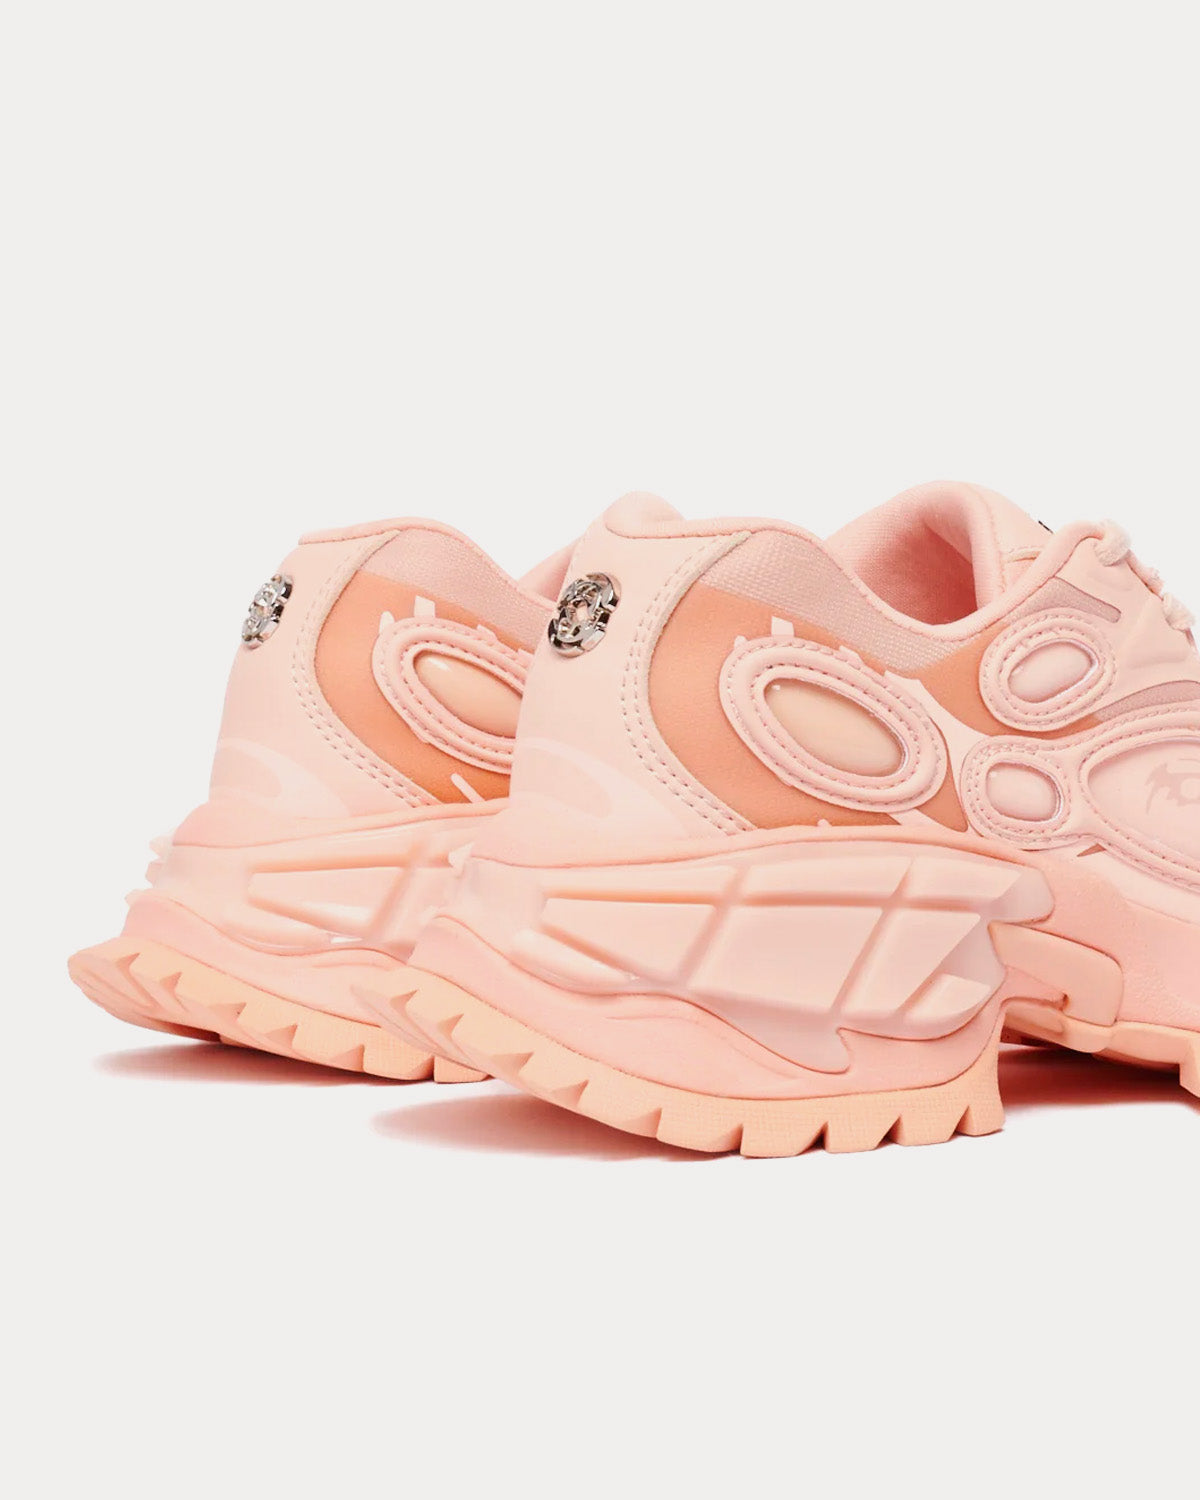 Rombaut - Nucleo Rose Quartz Pink Low Top Sneakers